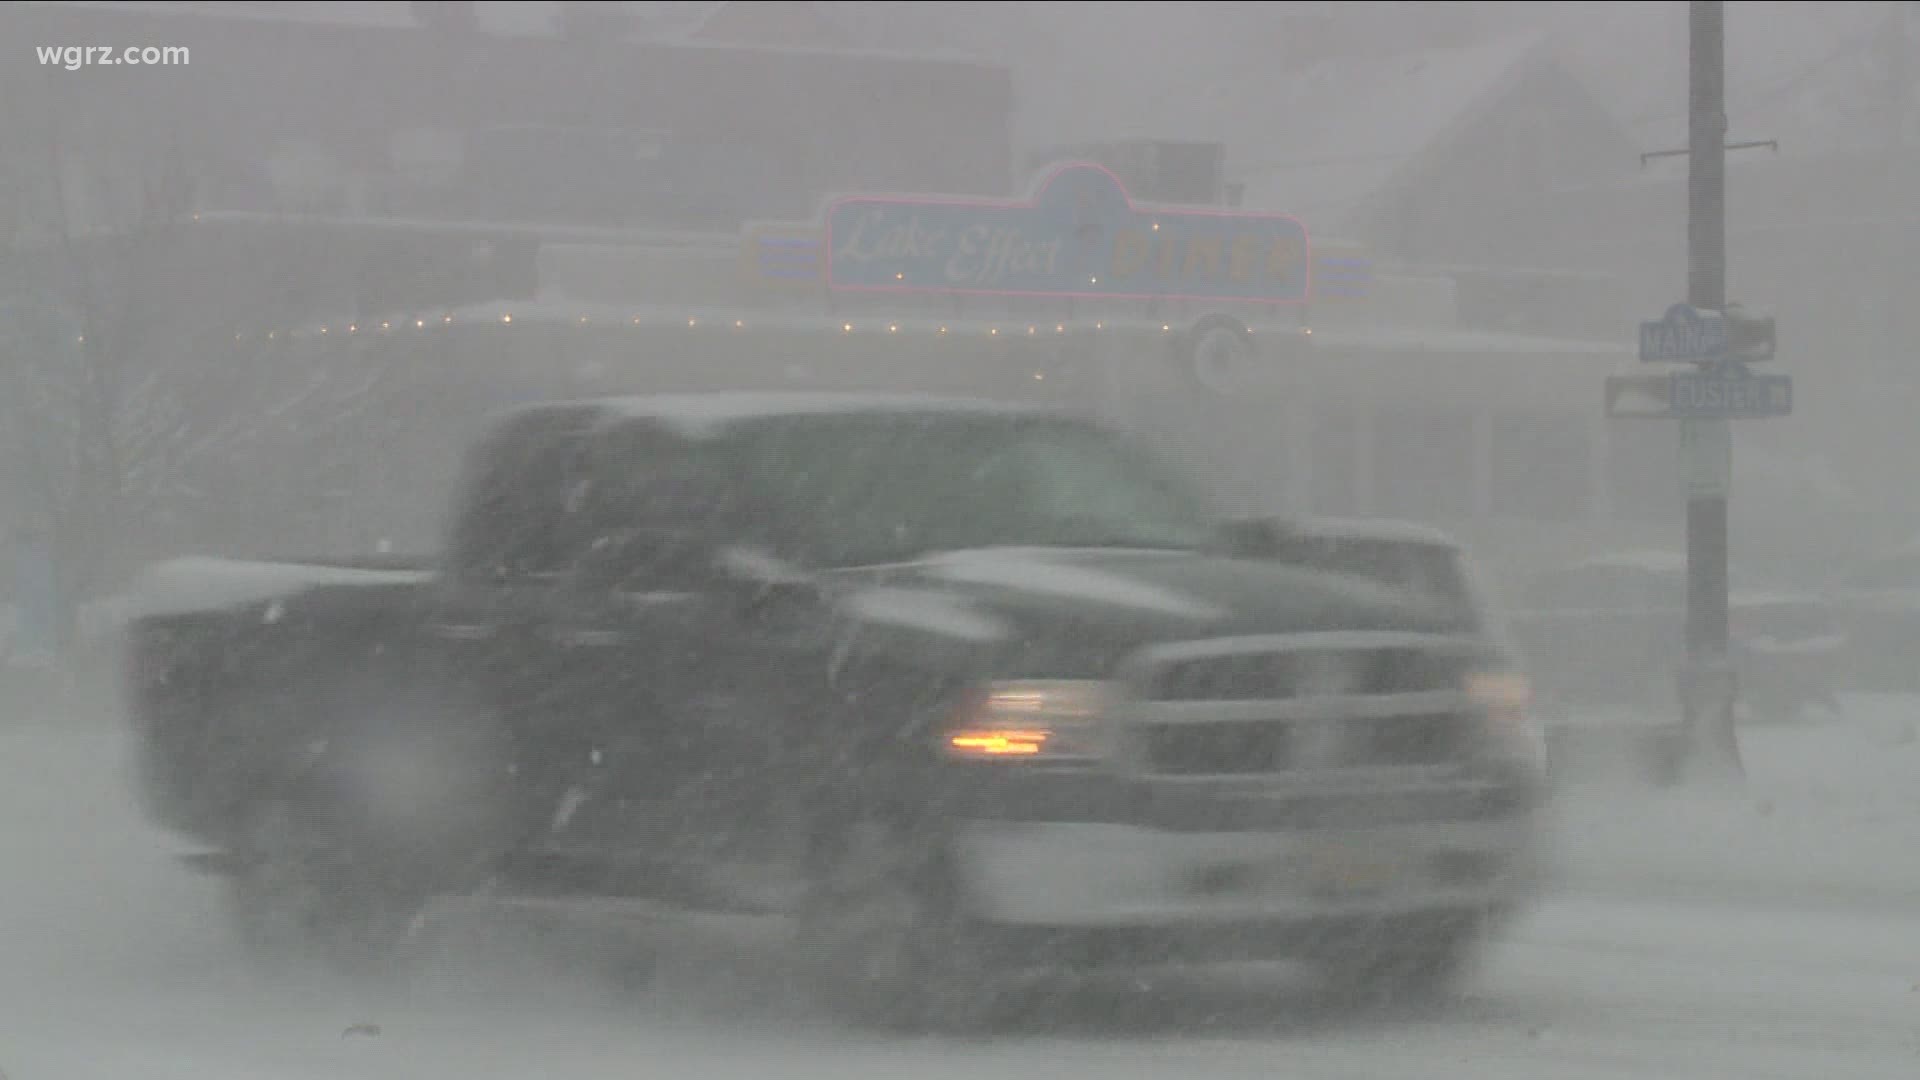 City of Buffalo updates neighbors on snow